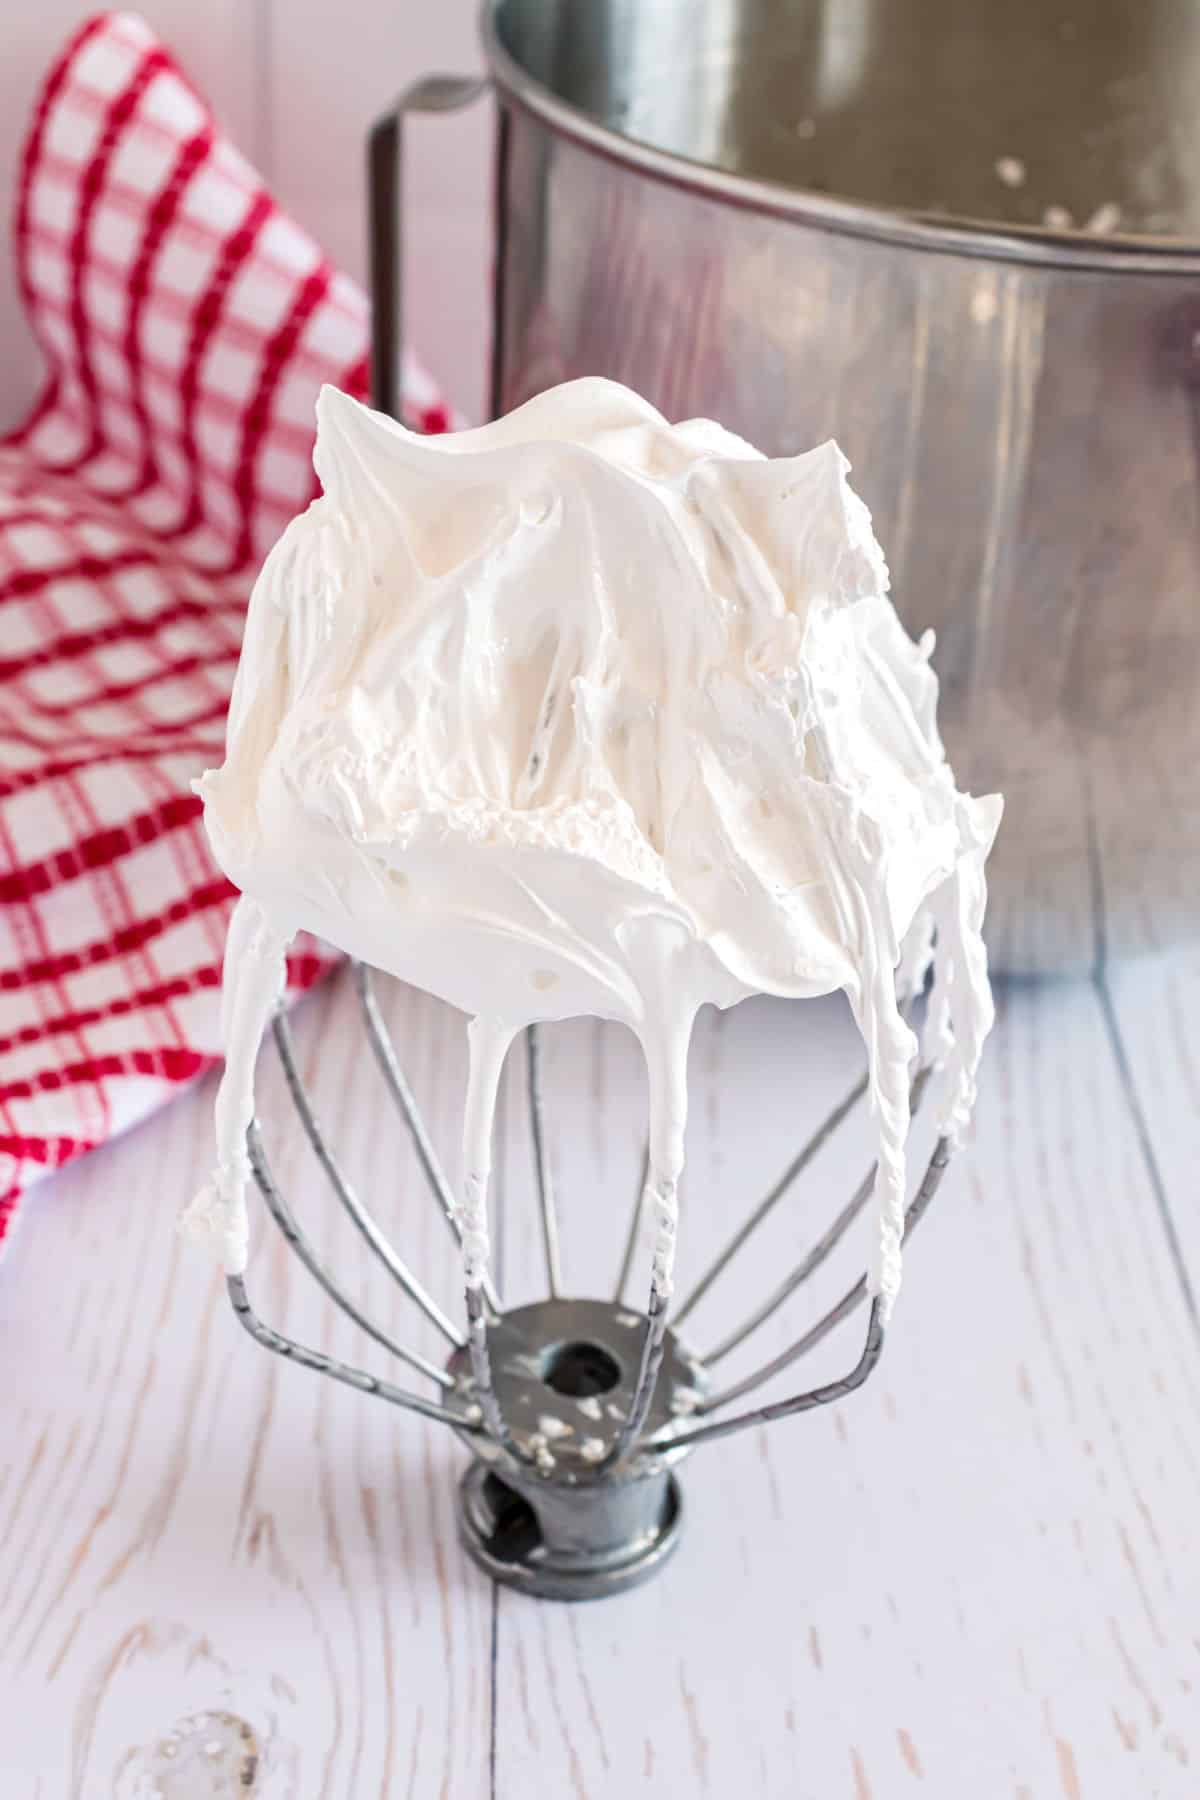 Homemade marshmallow cream on a whisk.